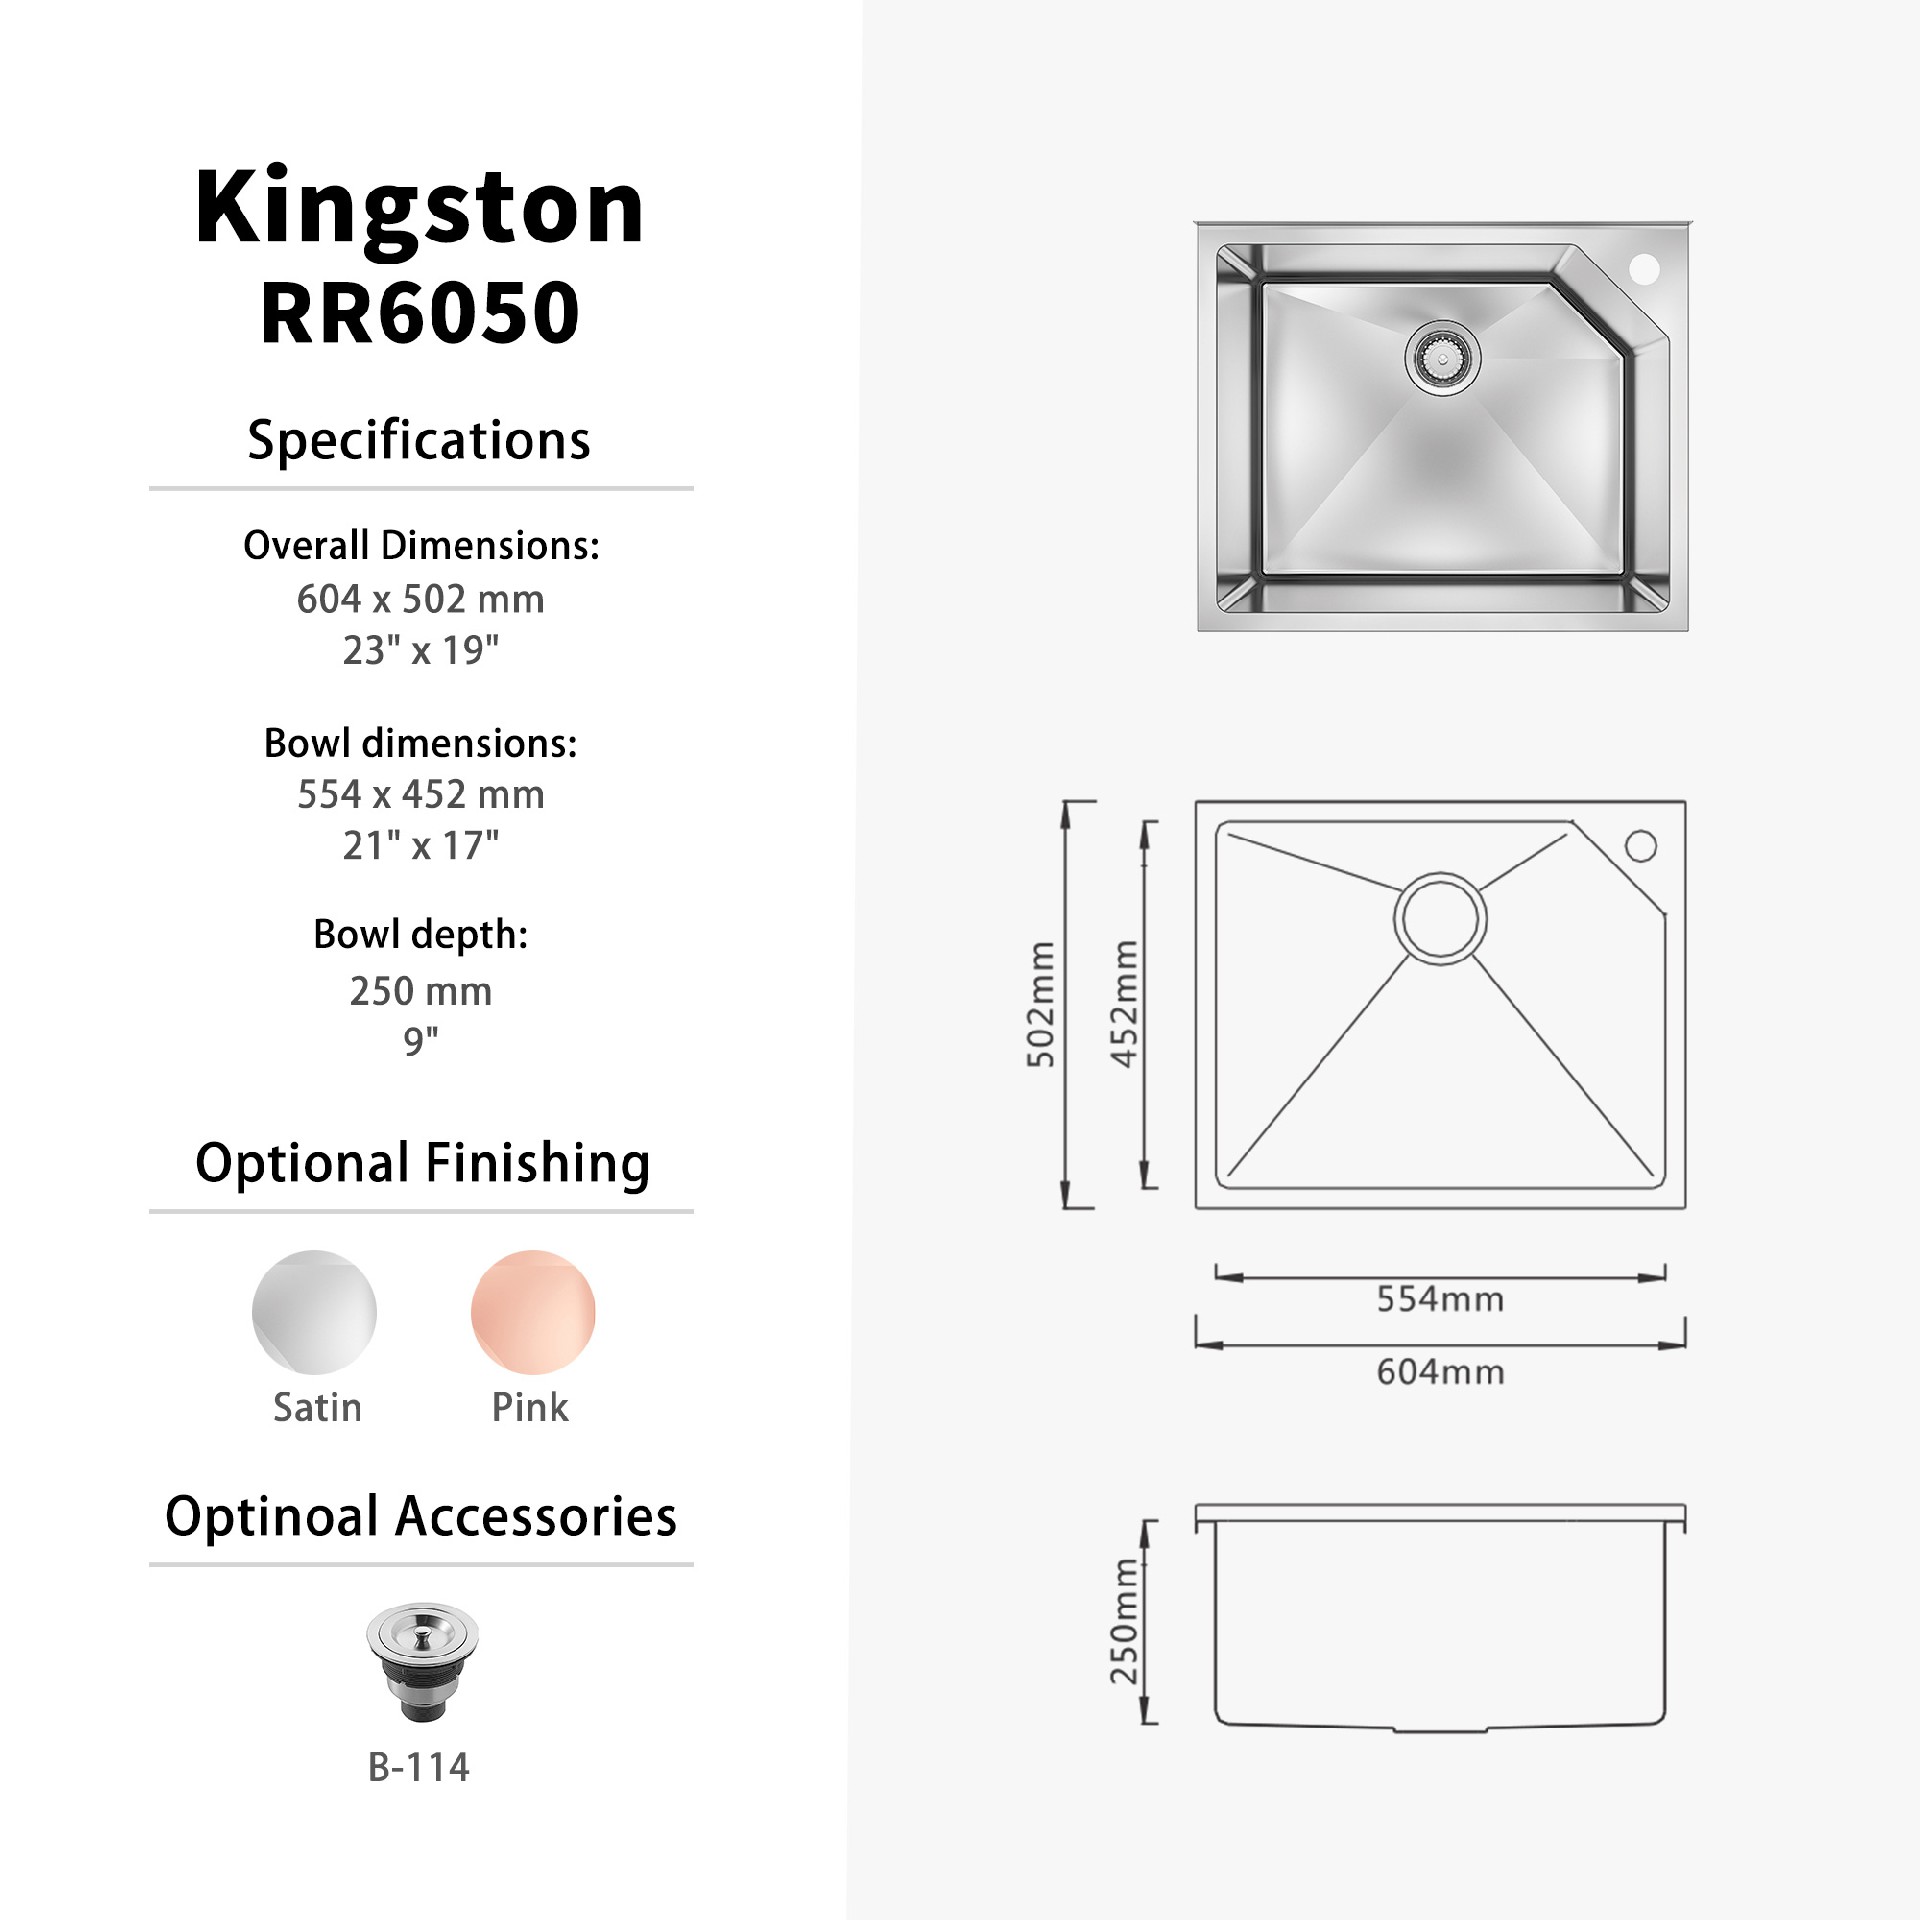 Kingston.RR6050